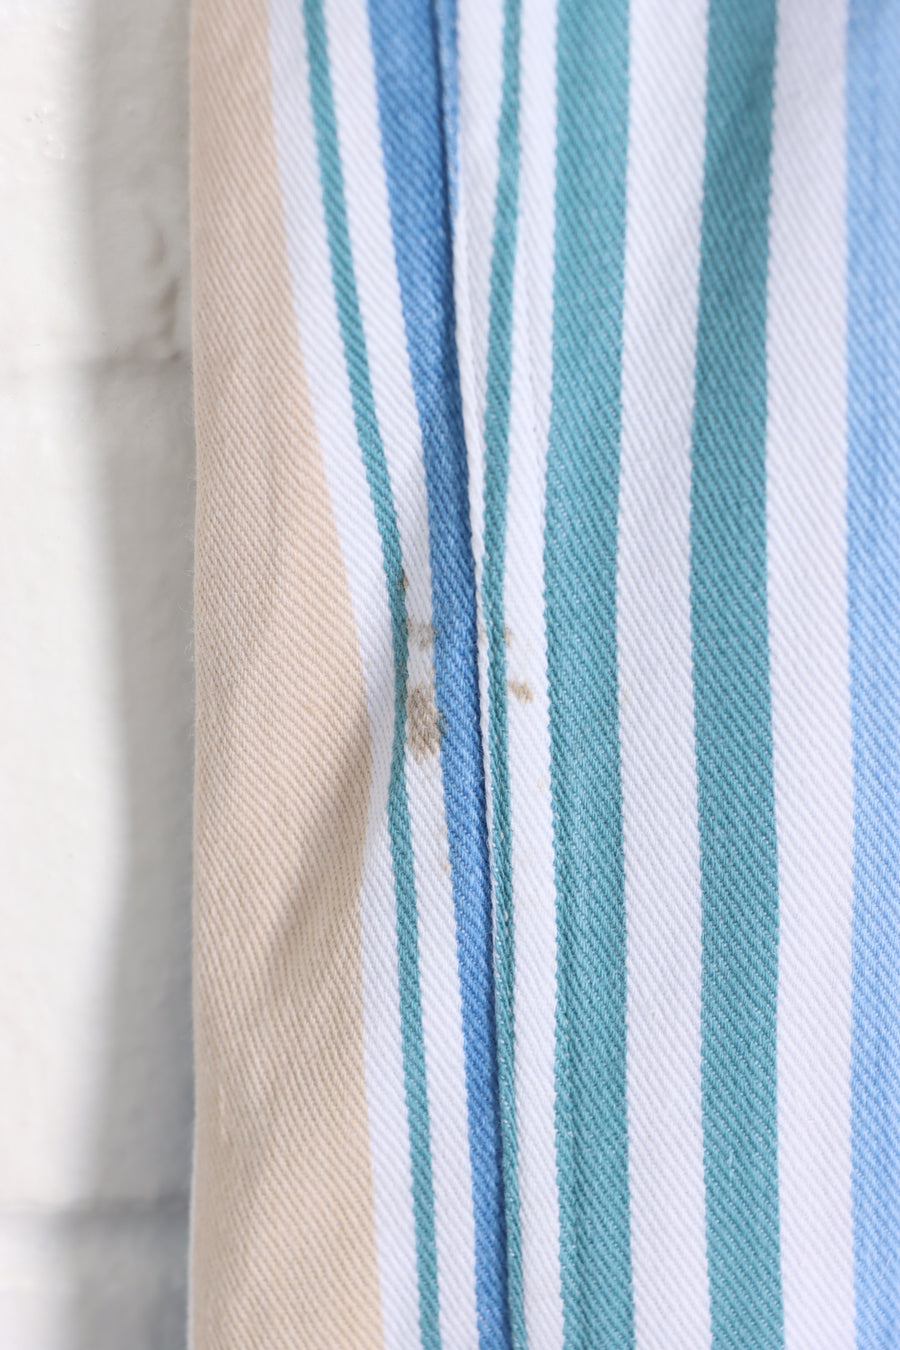 Windsor Shirt Company Striped Button Up Short Sleeve Shirt (XL)